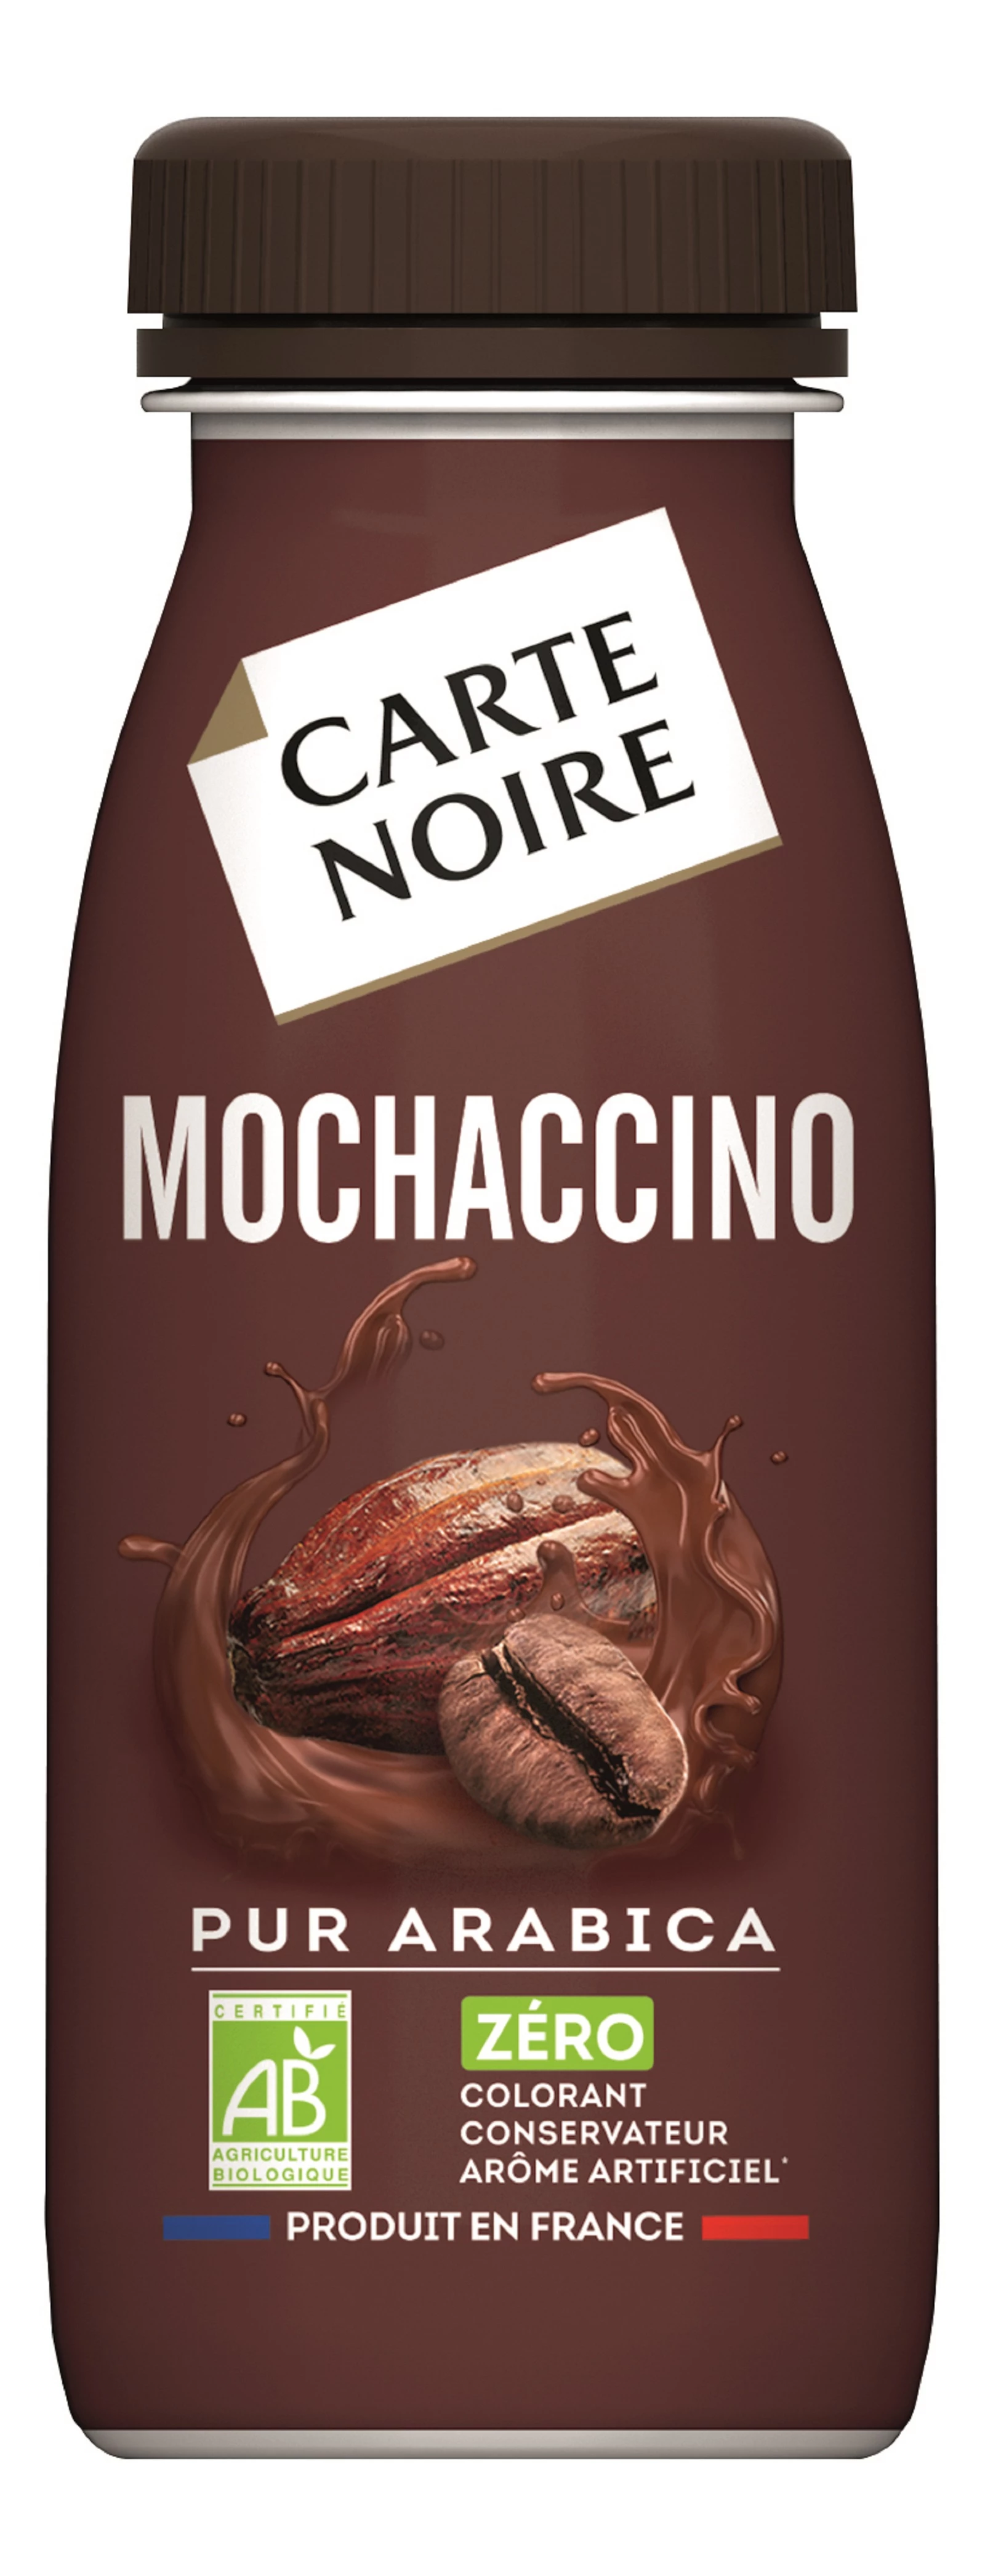 Bebida de café Mochaccino Bio 25cl - CARTE NOIRE